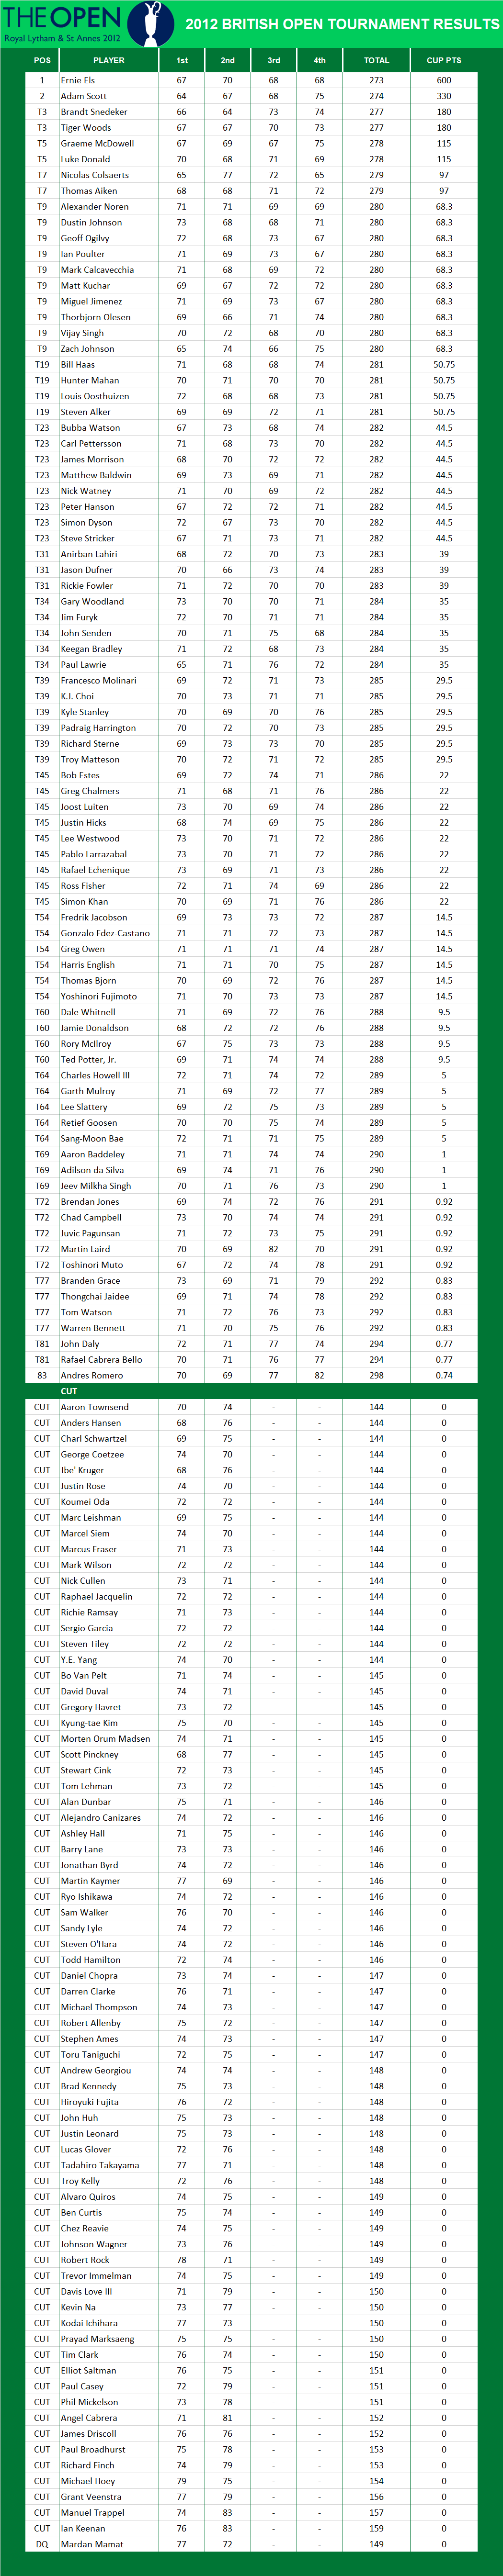 2012 British Open Championship PGA Results